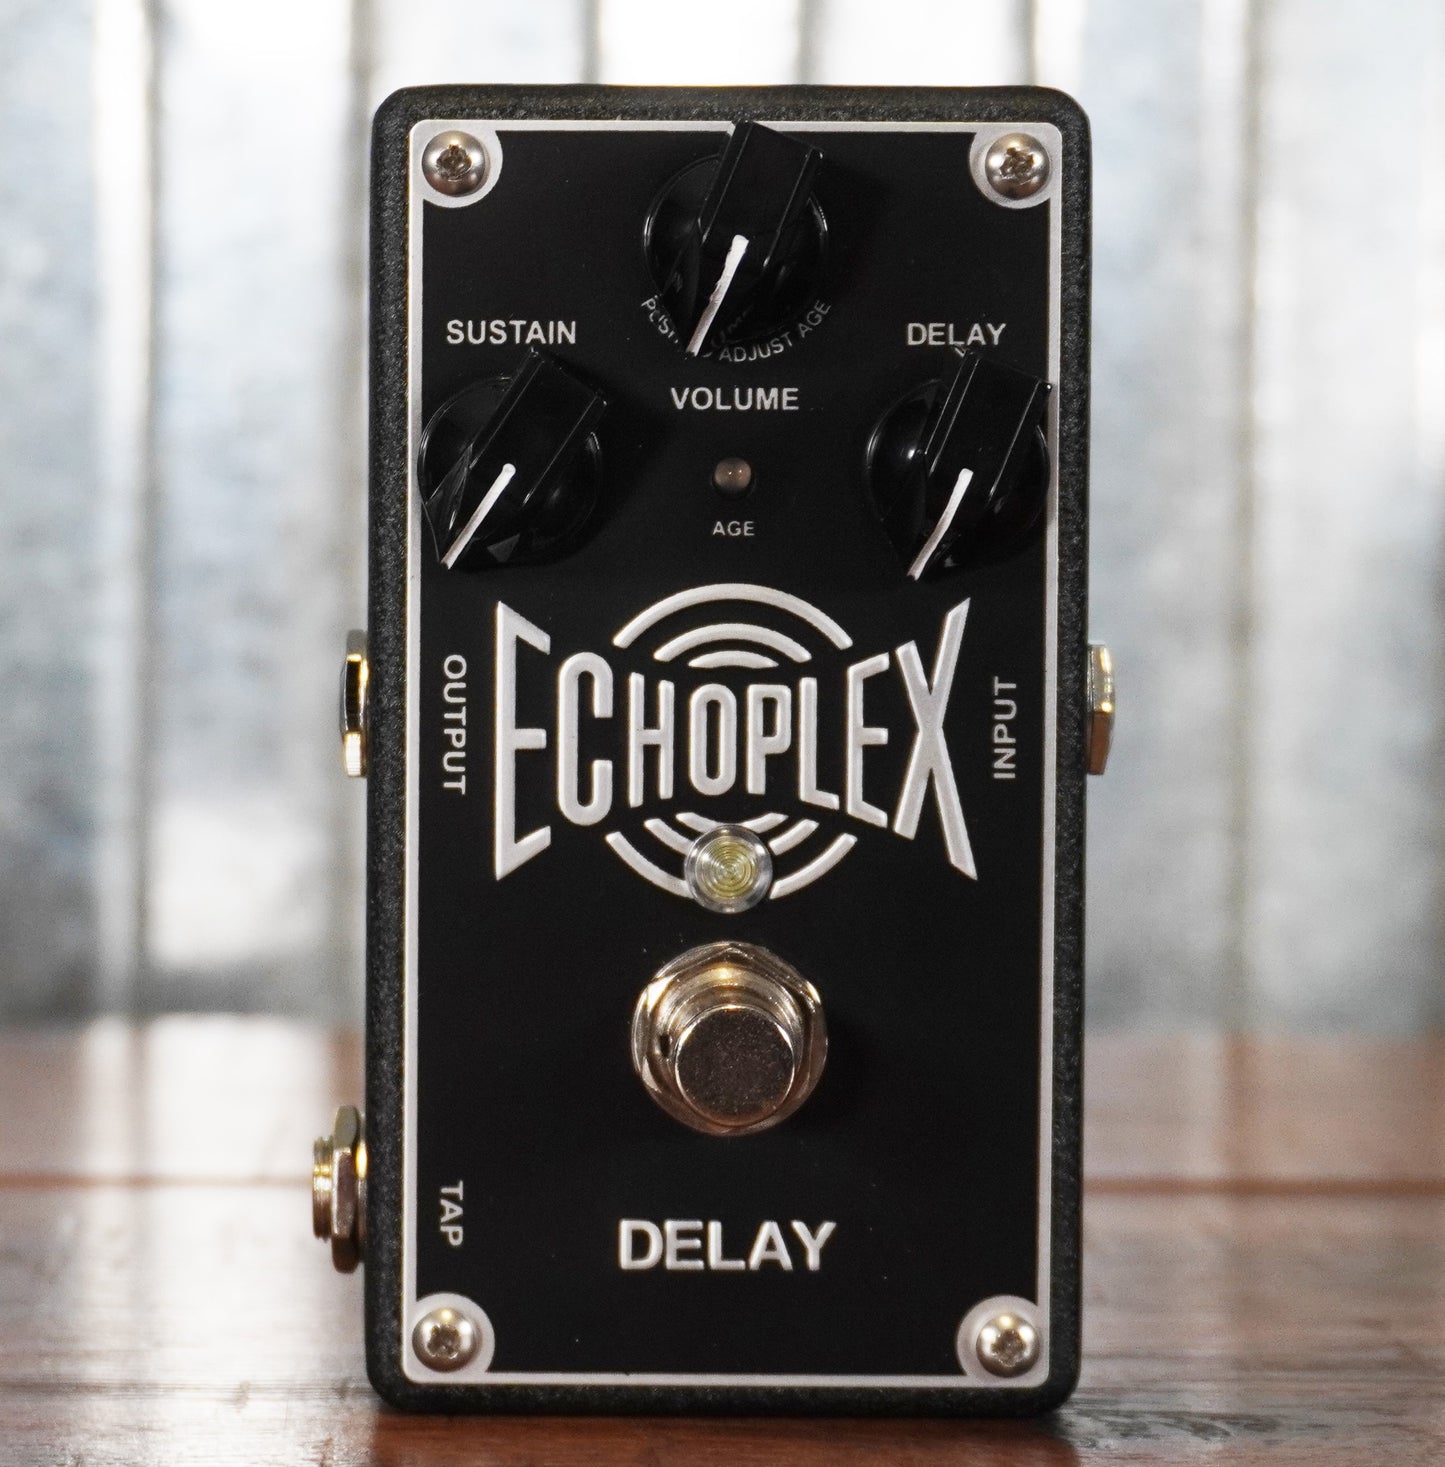 Dunlop EP103 Echoplex Tape Echo Delay Guitar Effect Pedal